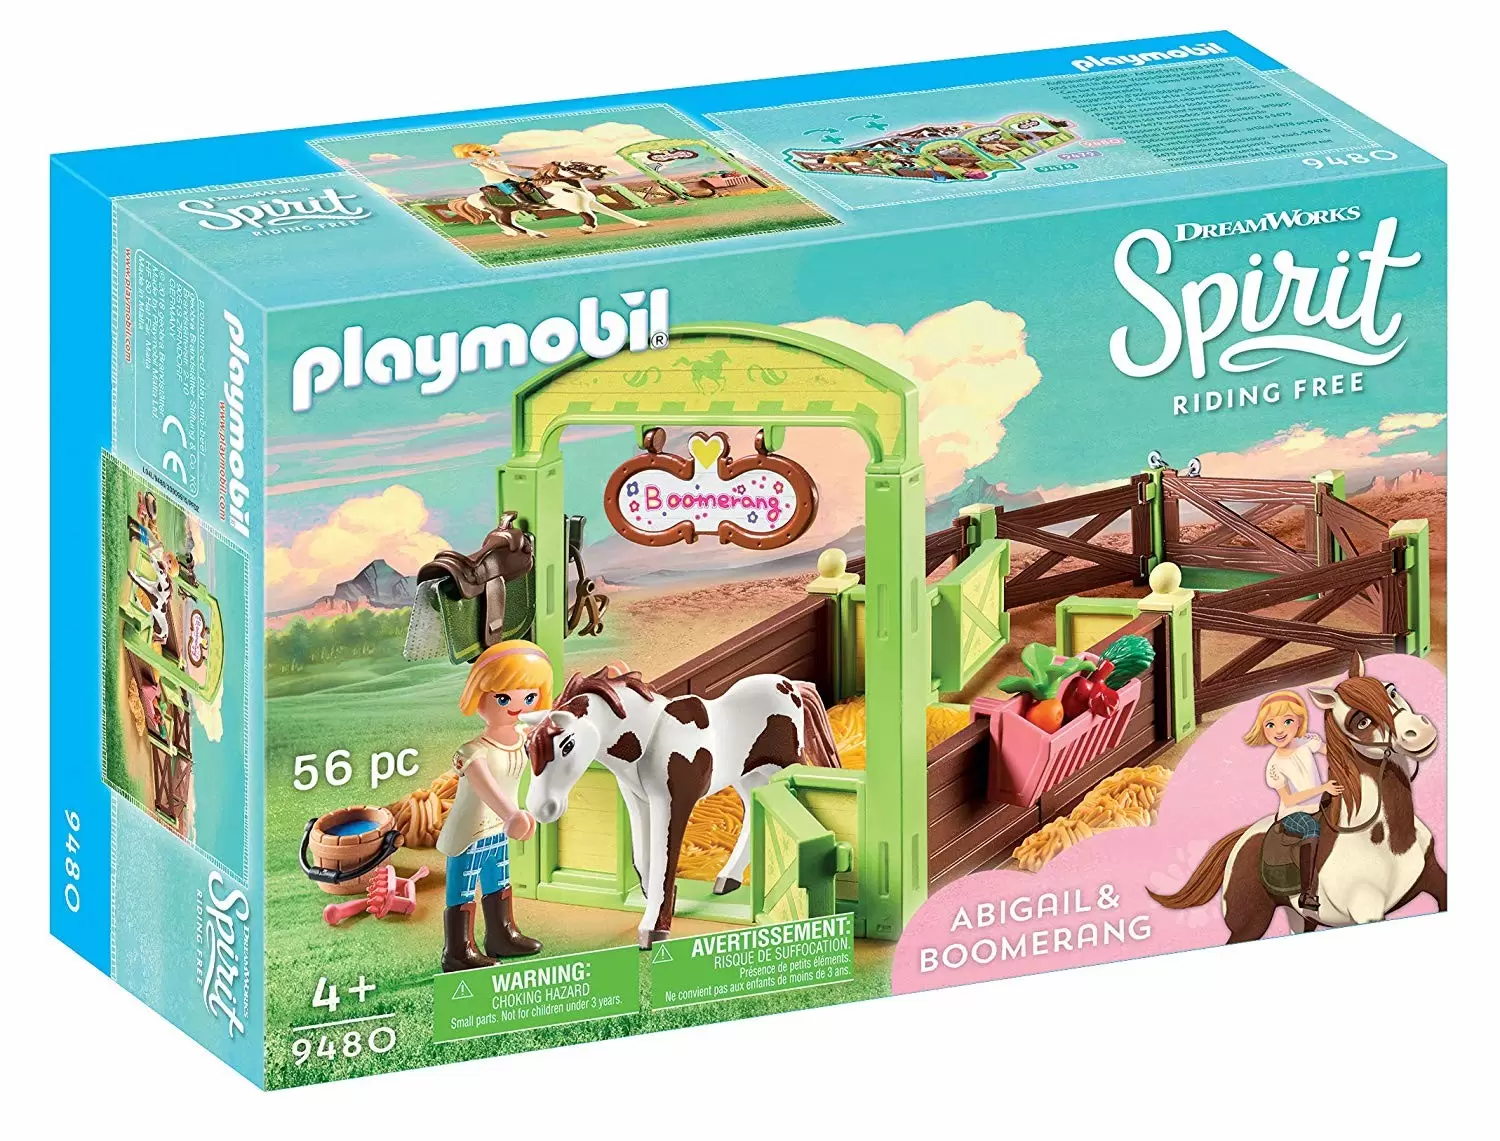 Abigail & Boomerang with Horse Stall - Playmobil Spirit Dreamworks 9480